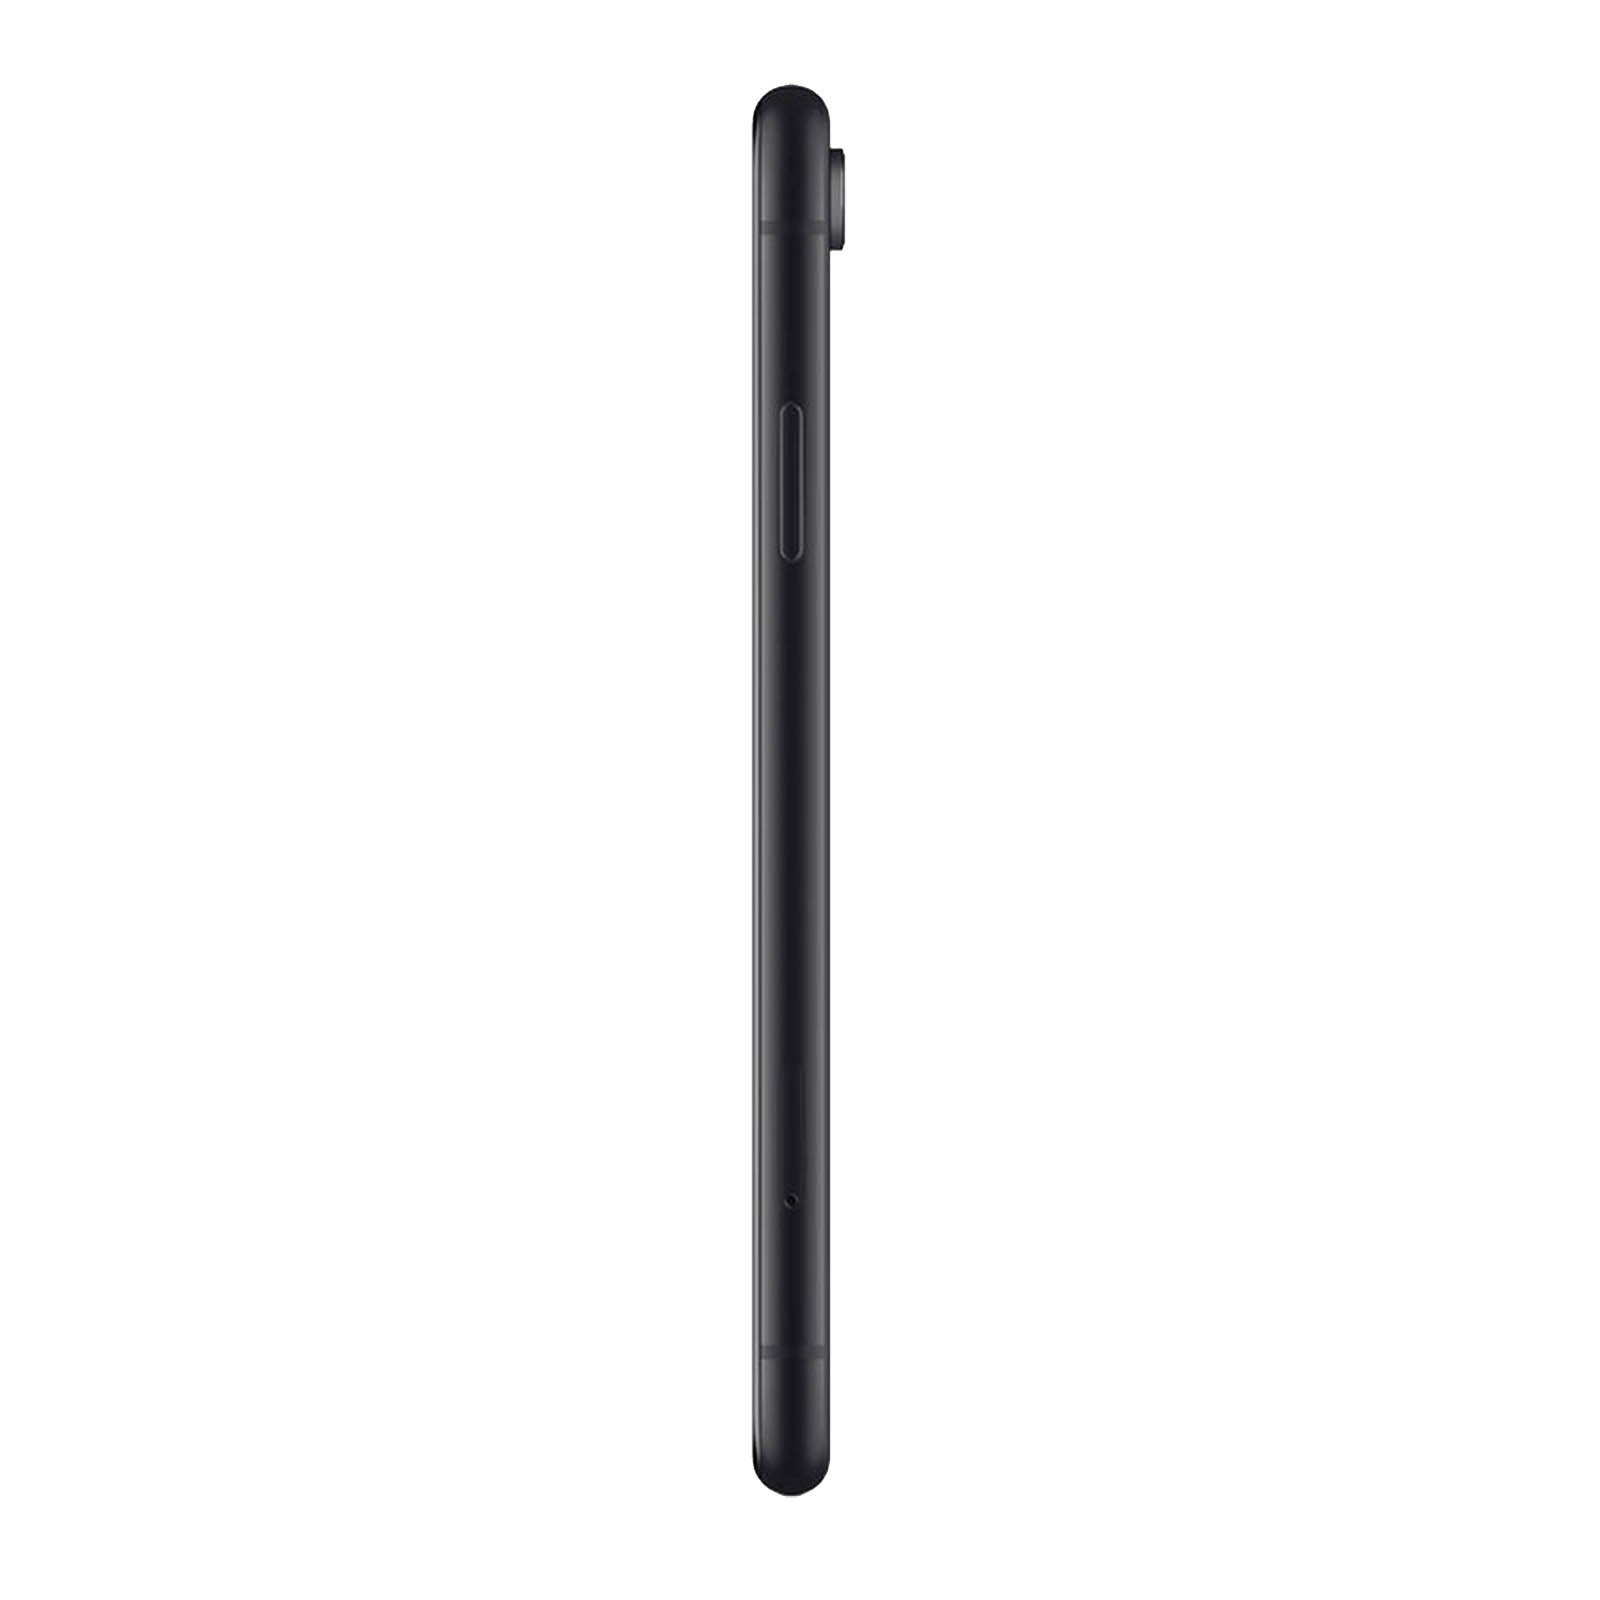 Apple iPhone XR 64GB Black Very Good - Unlocked